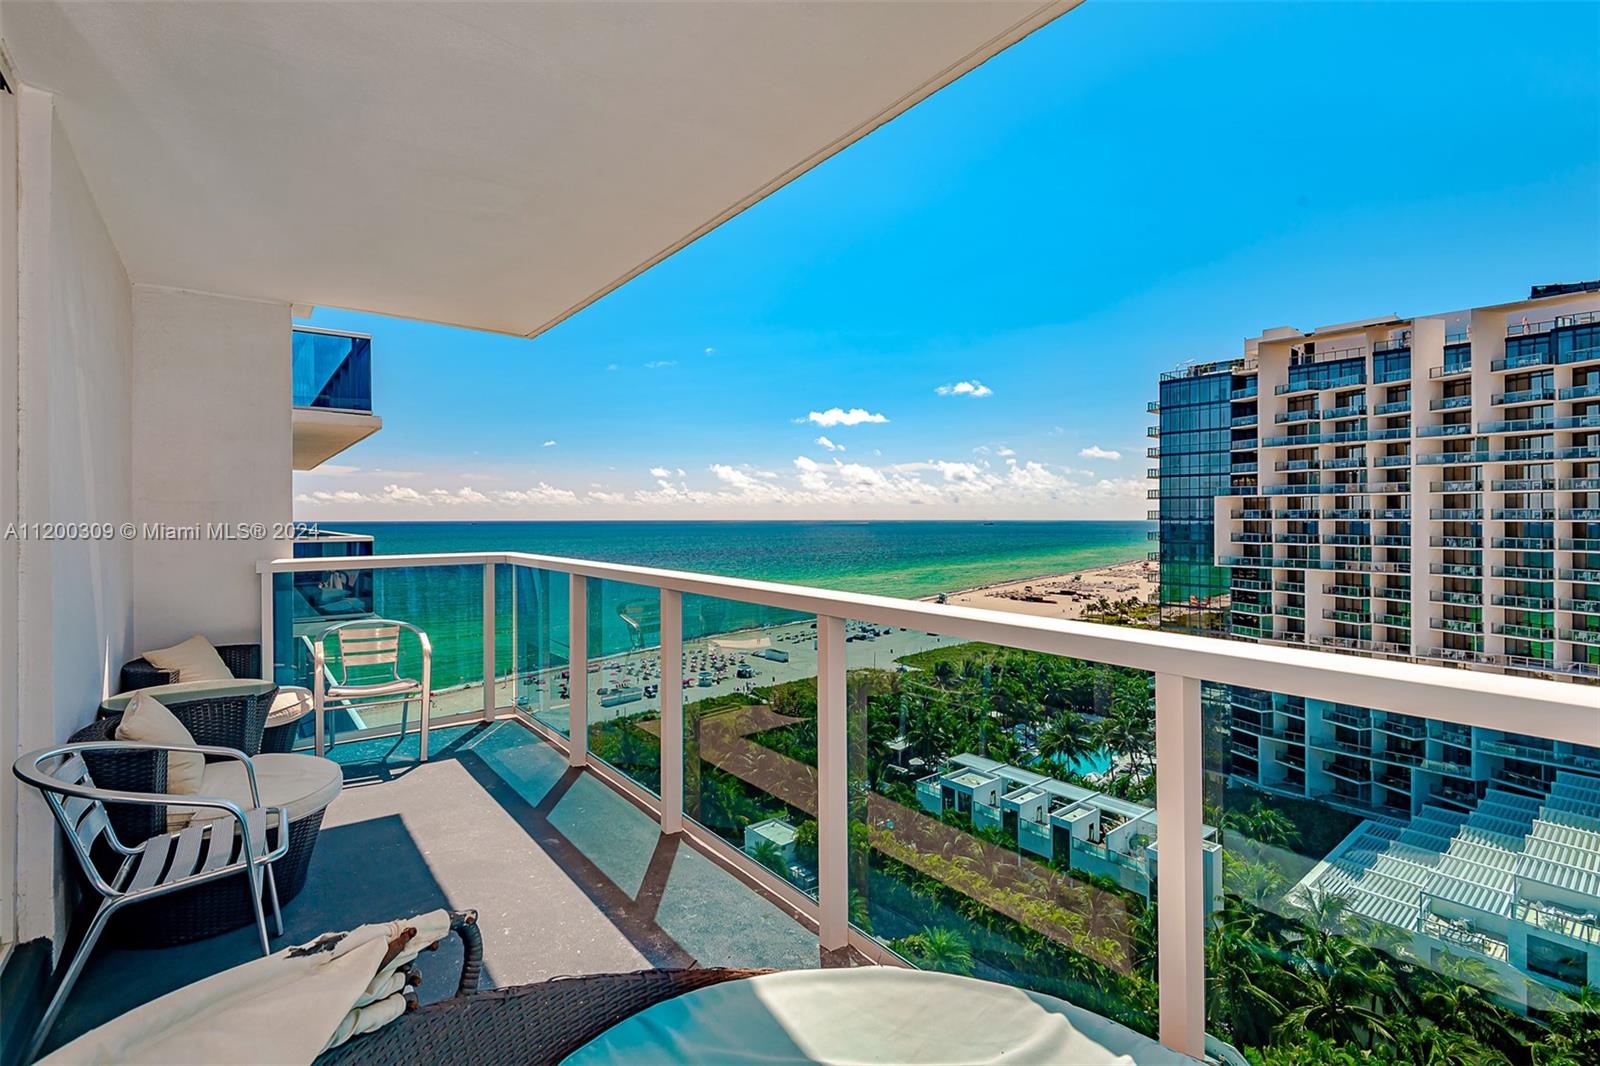 Rental Property at 2301 Collins Ave 1506, Miami Beach, Miami-Dade County, Florida - Bedrooms: 2 
Bathrooms: 2  - $11,900 MO.